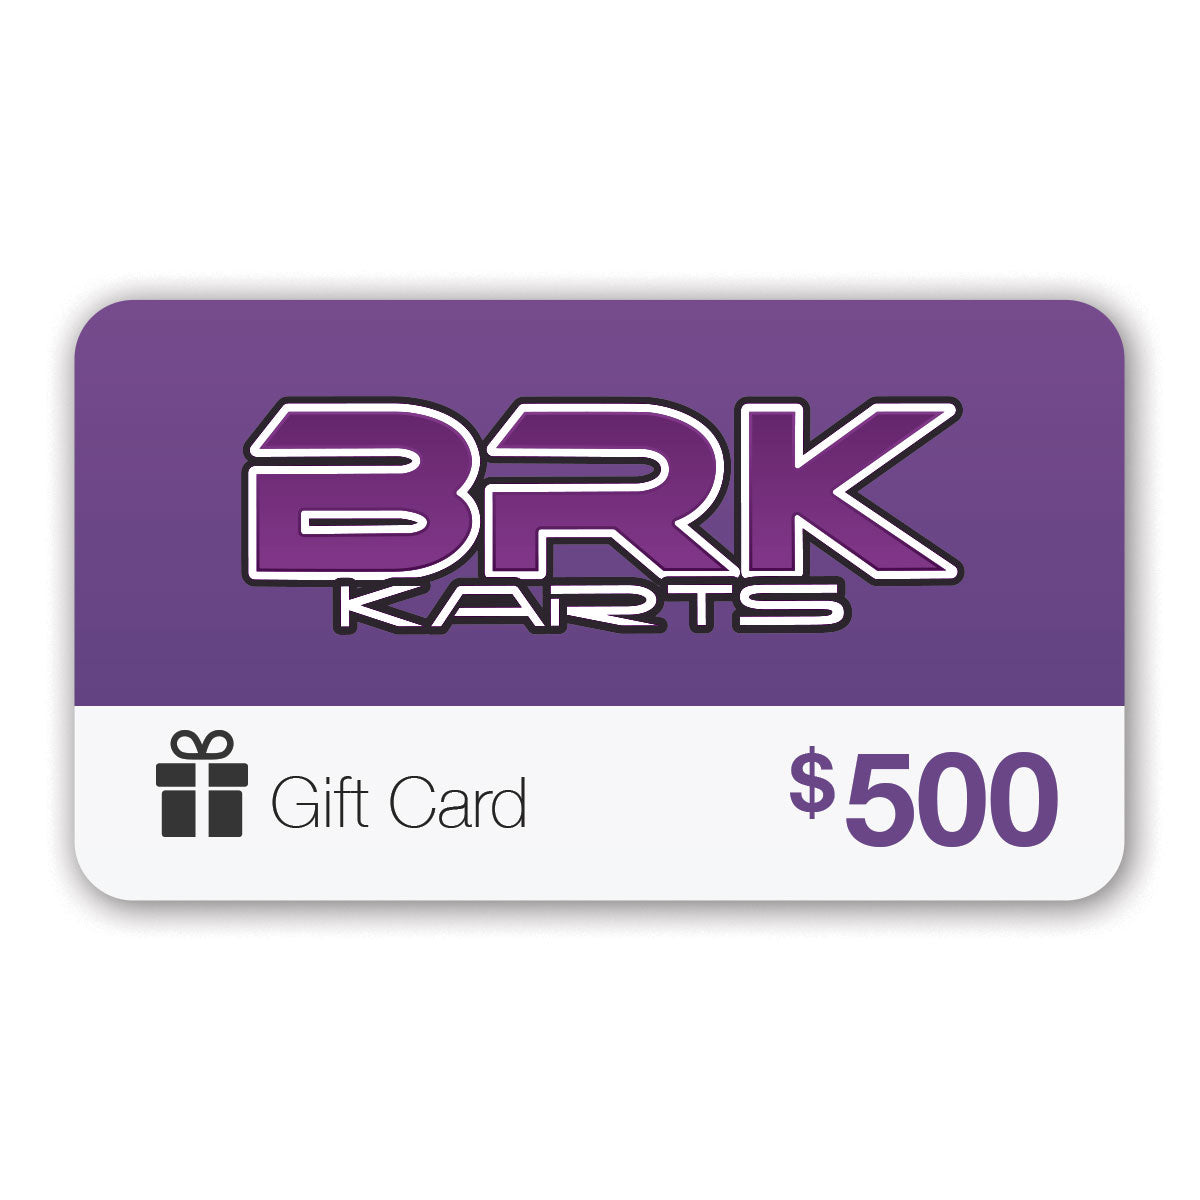 BRK Karts Gift Card - $500